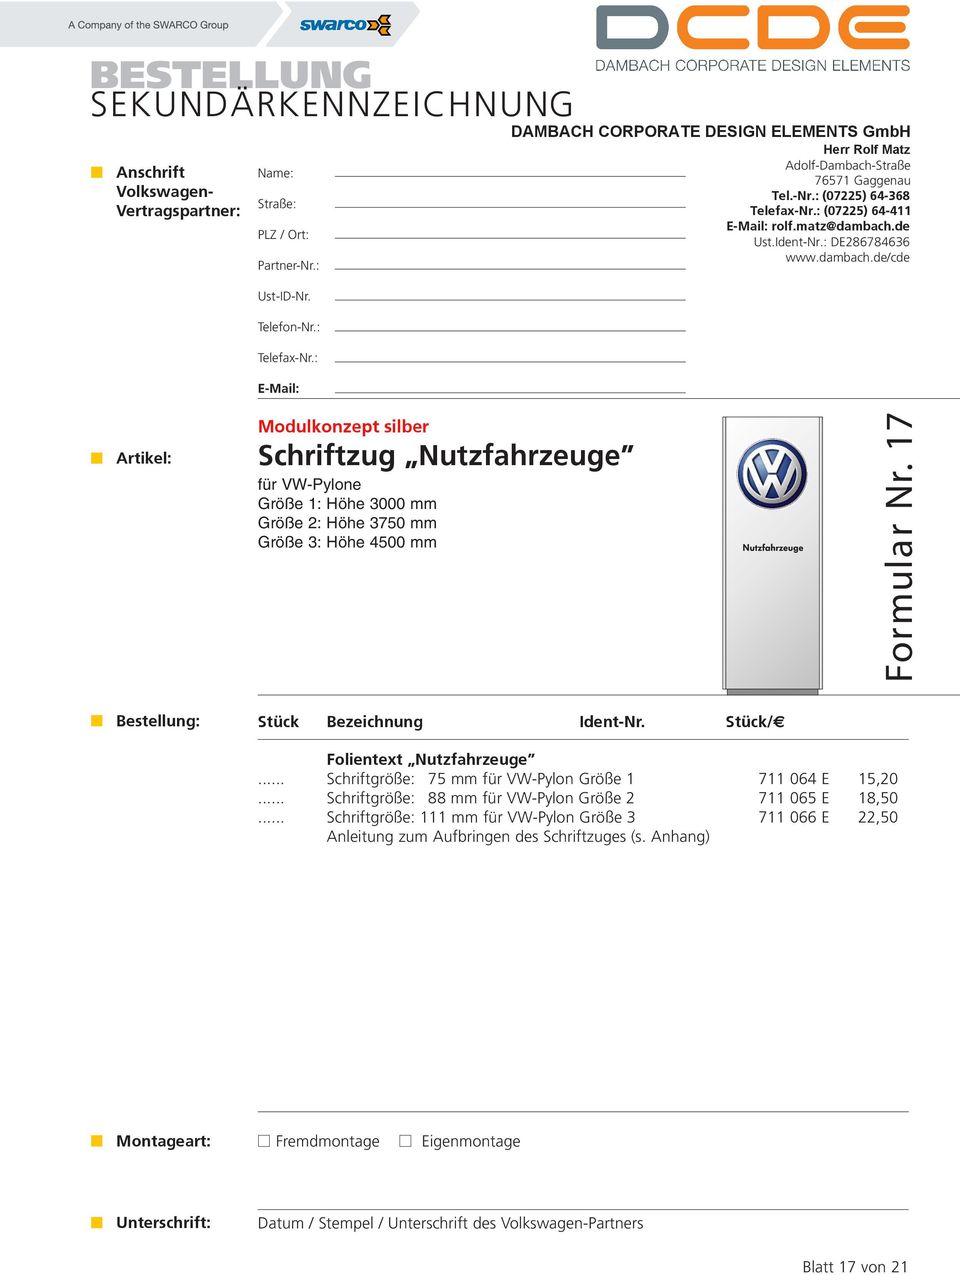 mm art: Folientext Nutzfahrzeuge Schriftgröße: 75 mm für VW-Pylon Größe 1 Schriftgröße: 88 mm für VW-Pylon